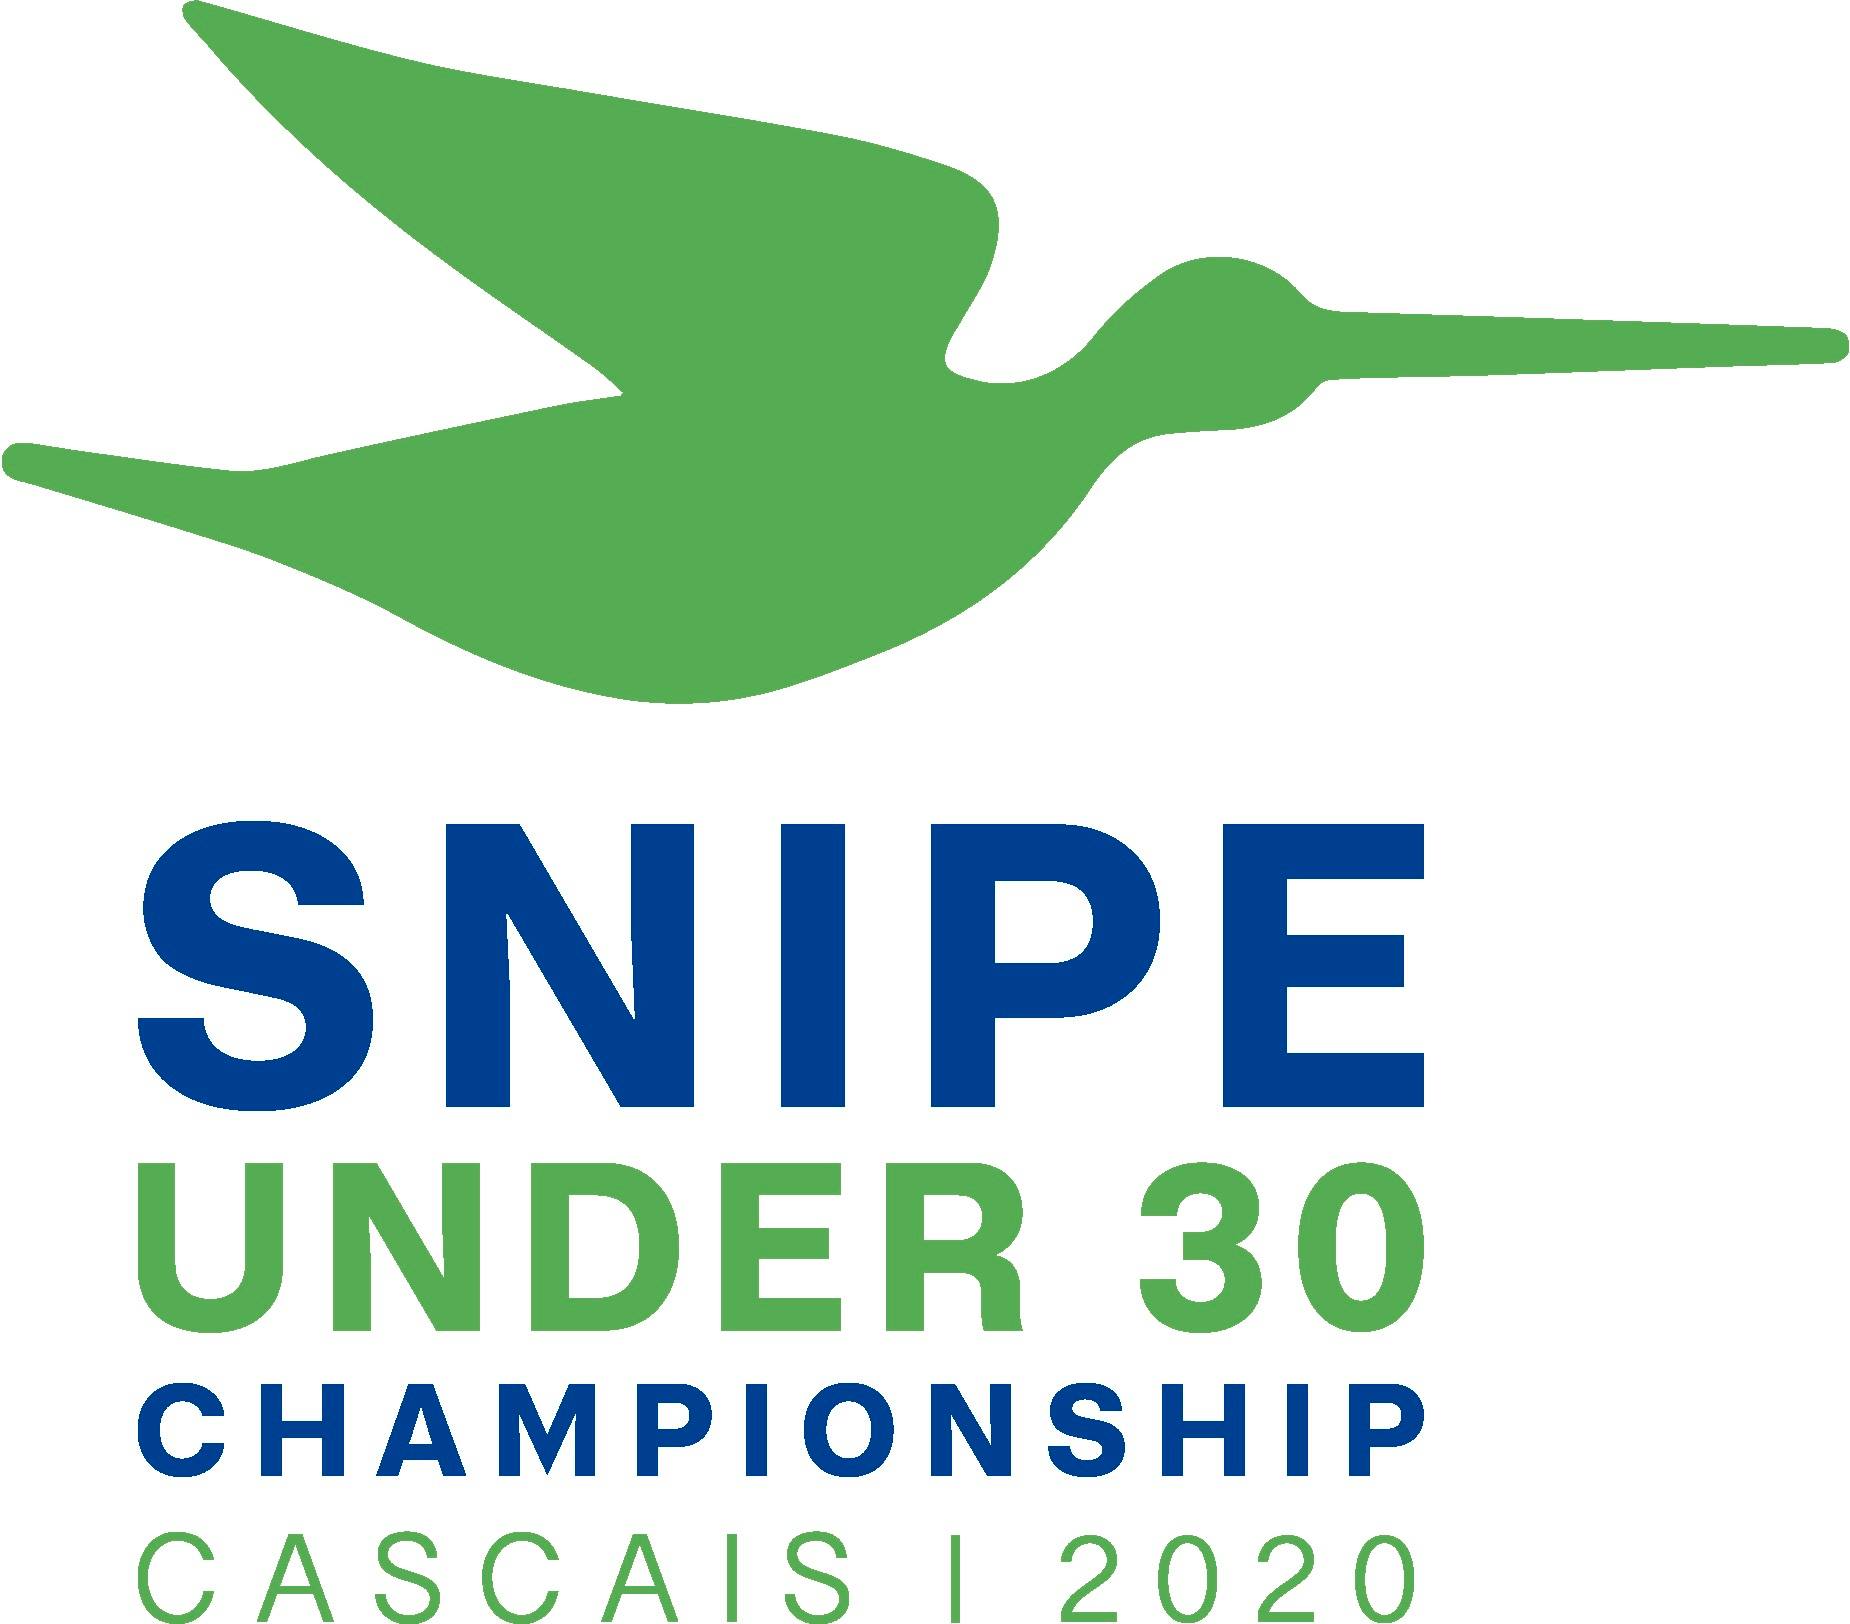 Snipe Under 30 Championship Image